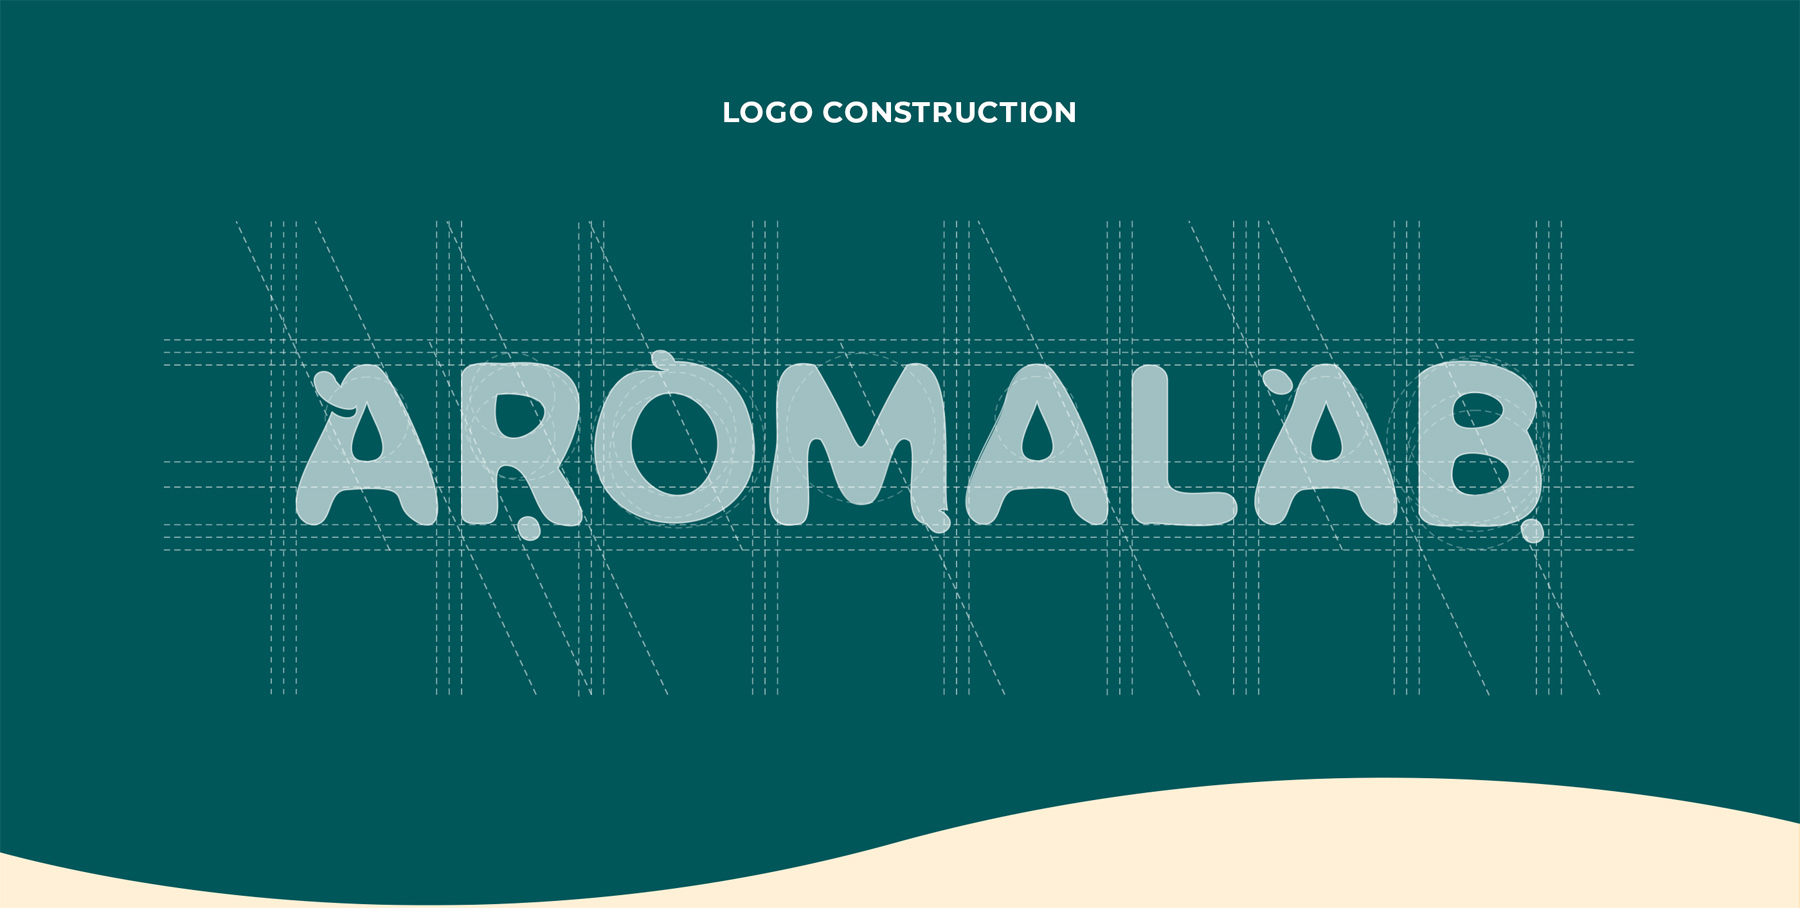 Aromalab Logo Construction